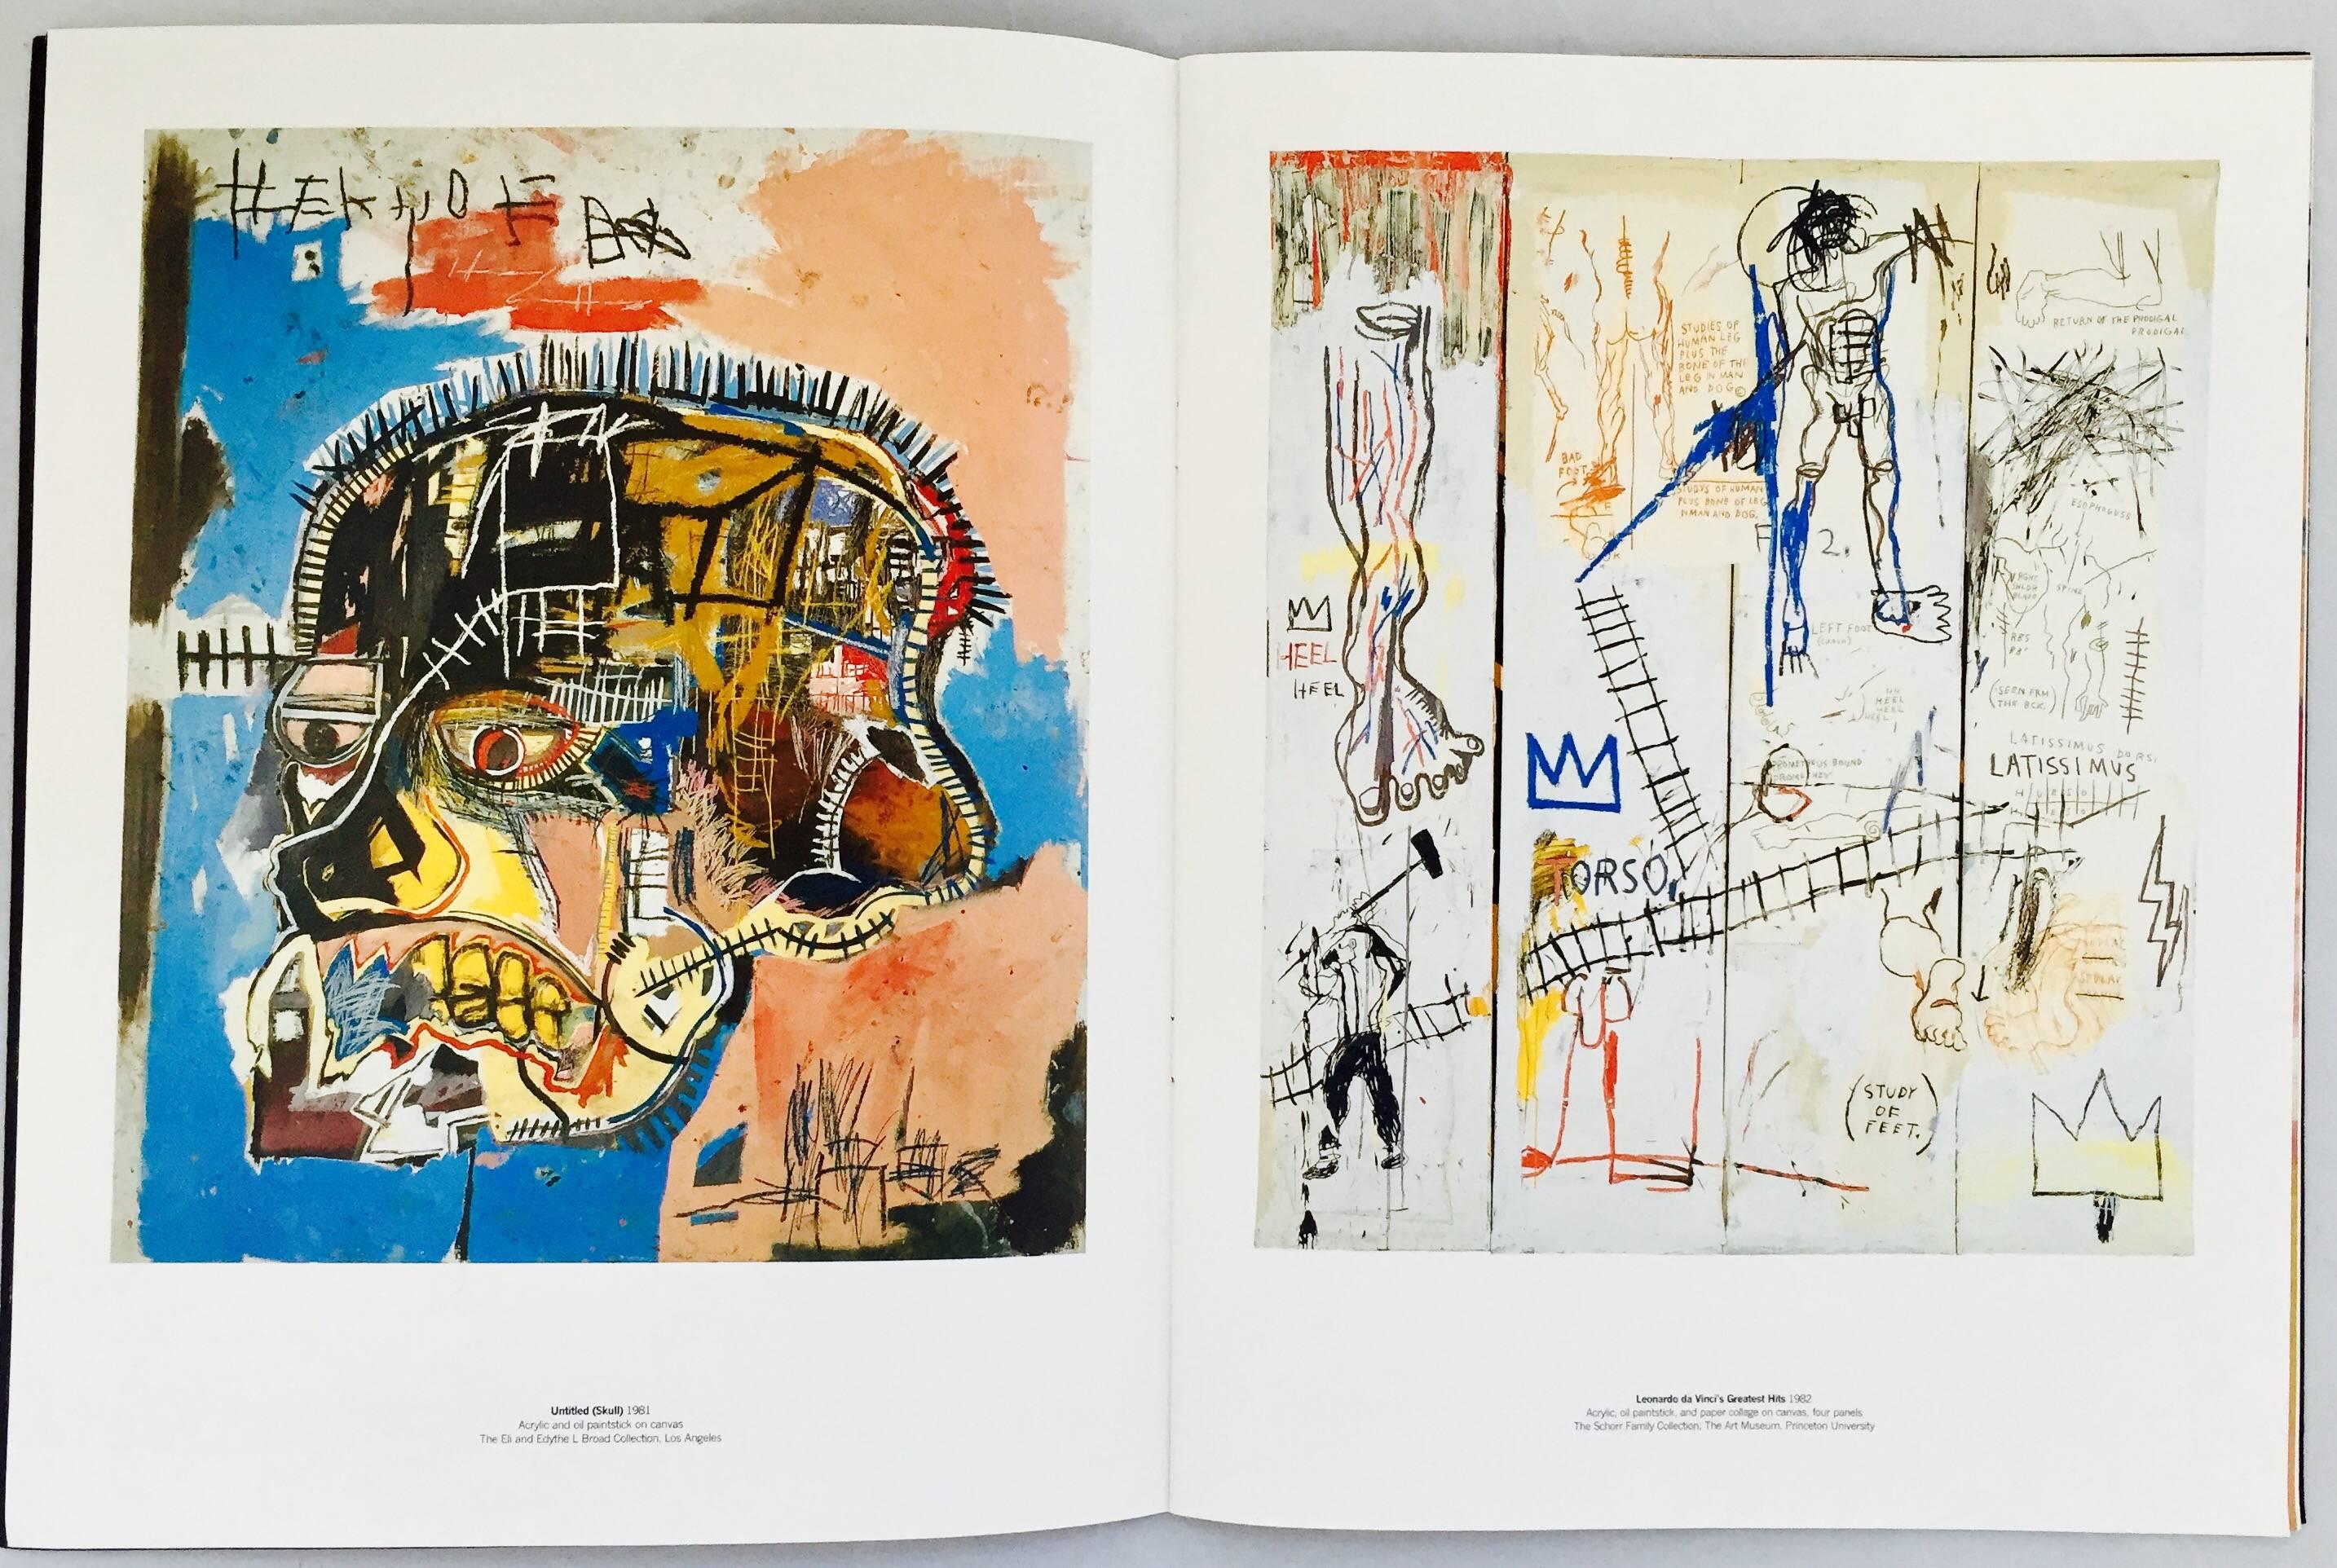 Basquiat at Serpentine Gallery, London (Exhibition Catalogue) - Pop Art Art by after Jean-Michel Basquiat